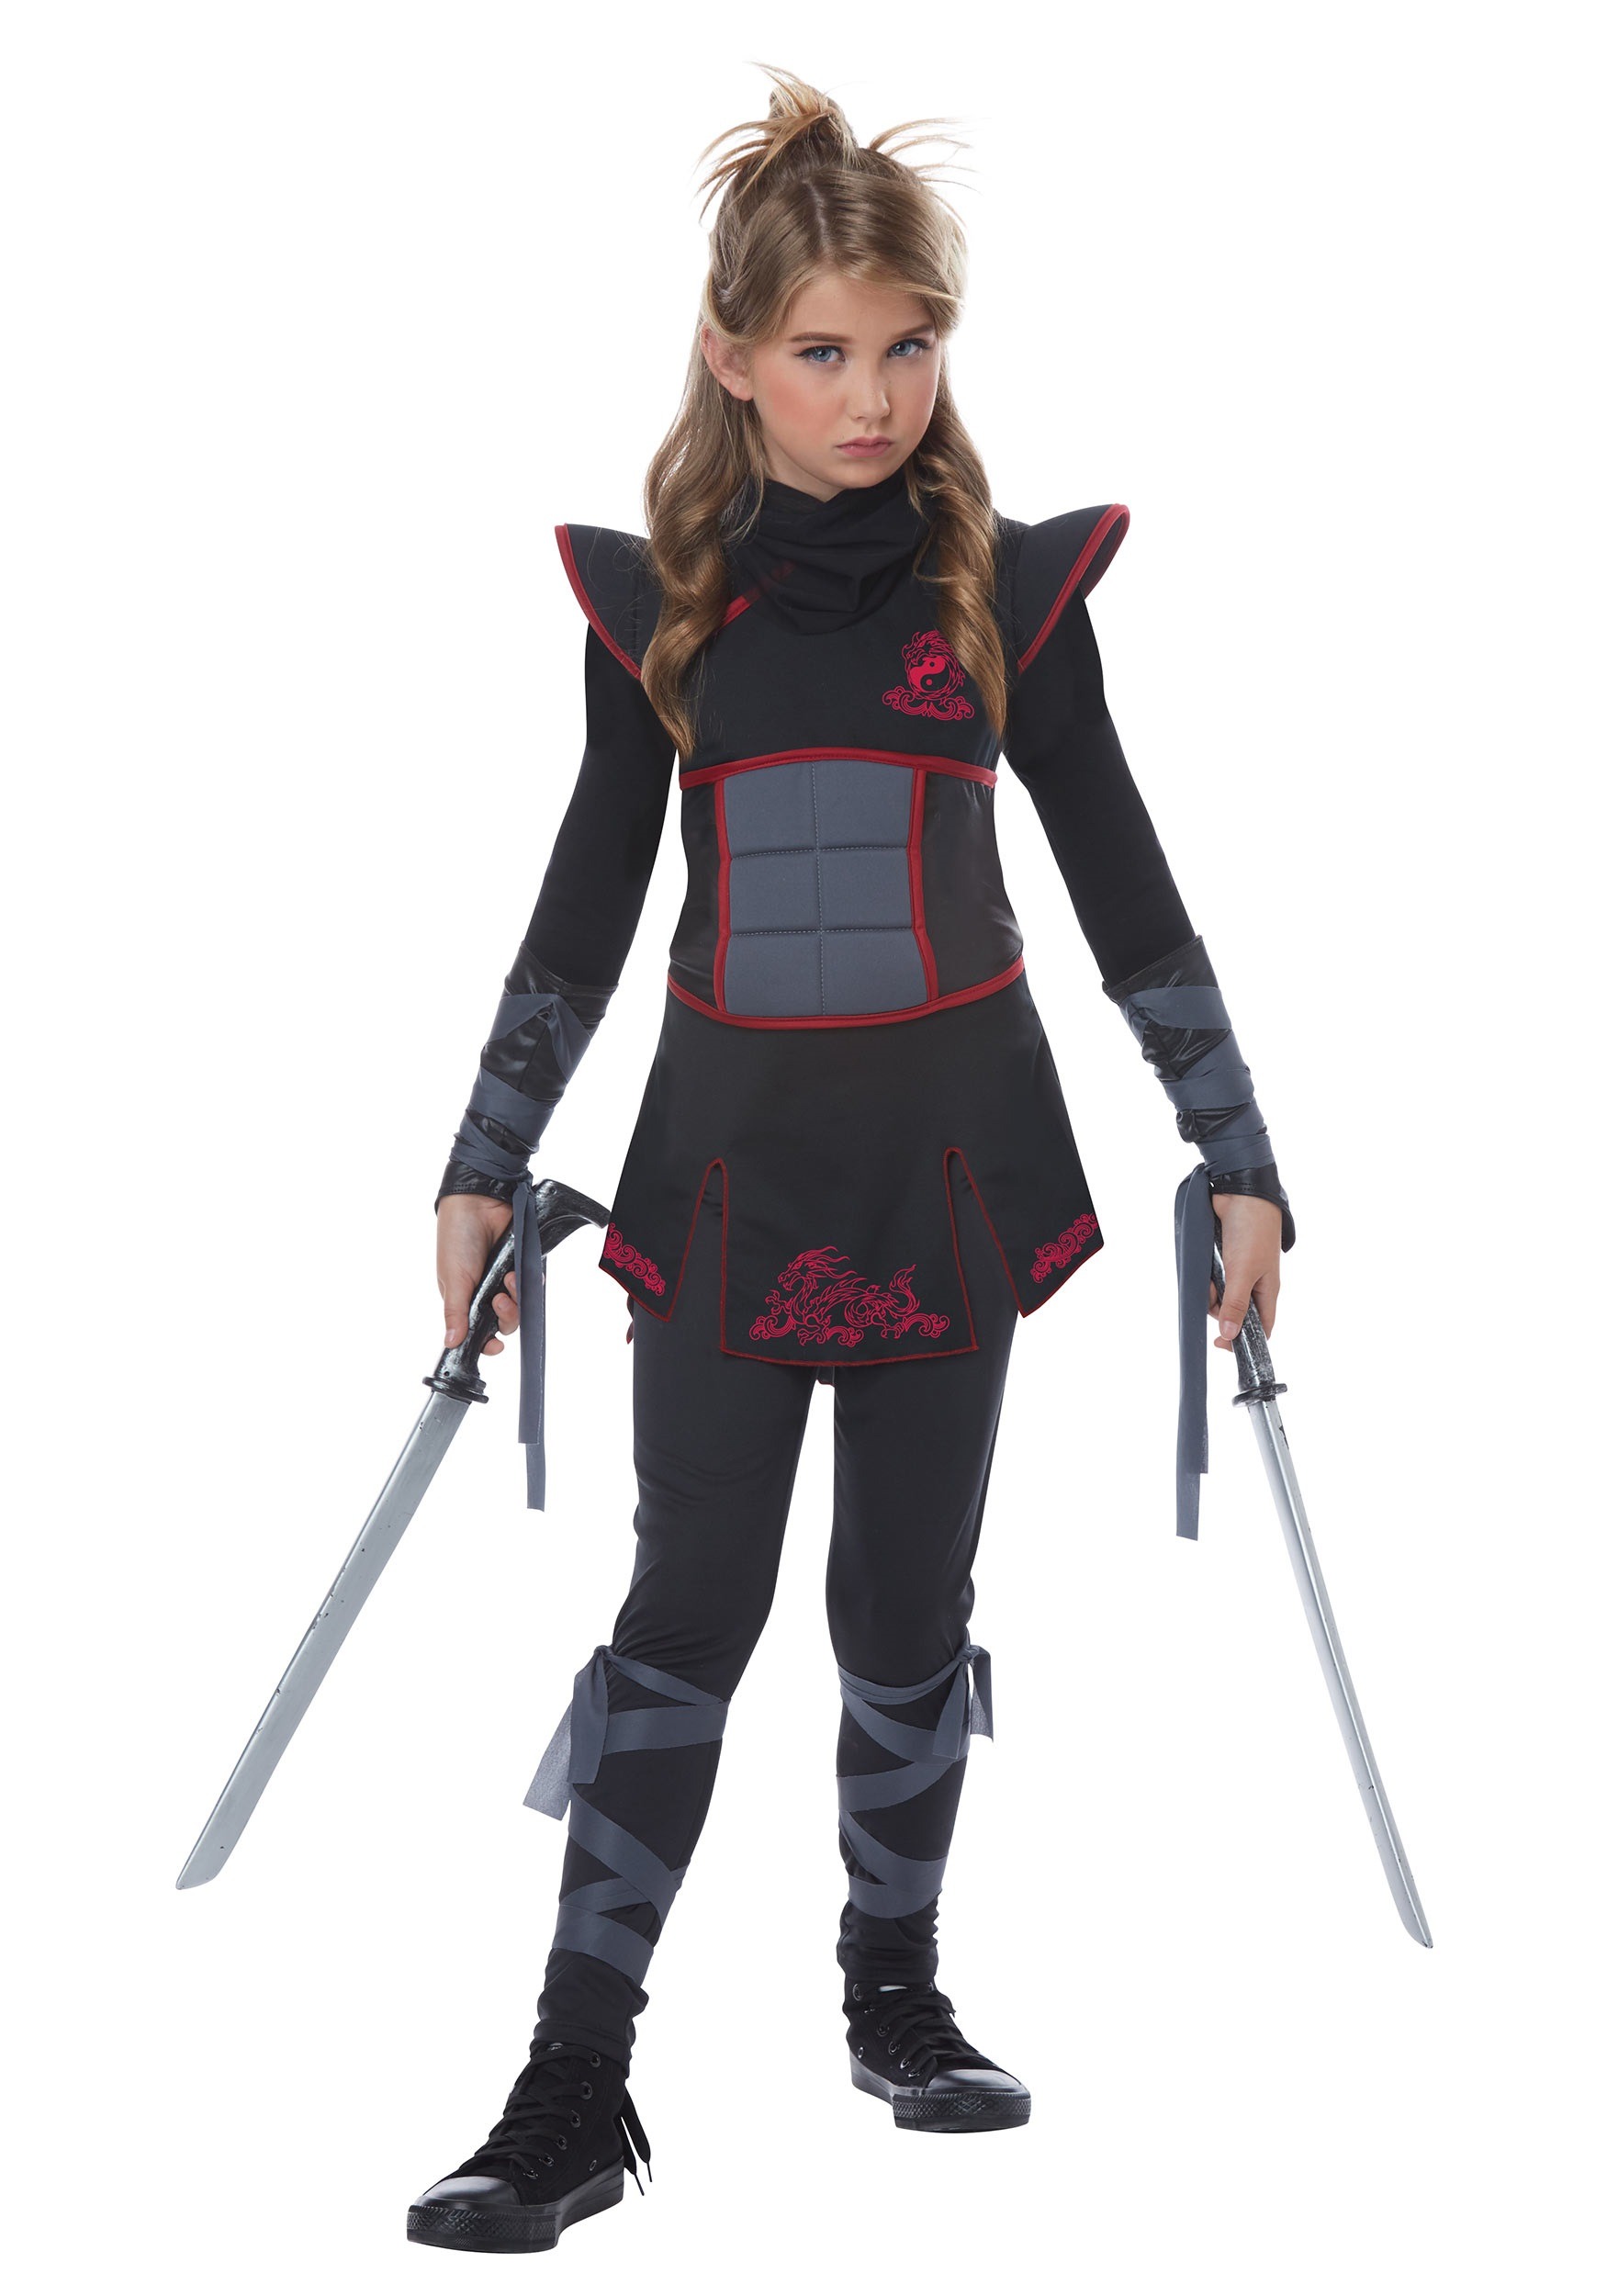 https://images.halloweencostumes.eu/products/40916/2-1-76686/girls-black-ninja-costume.jpg